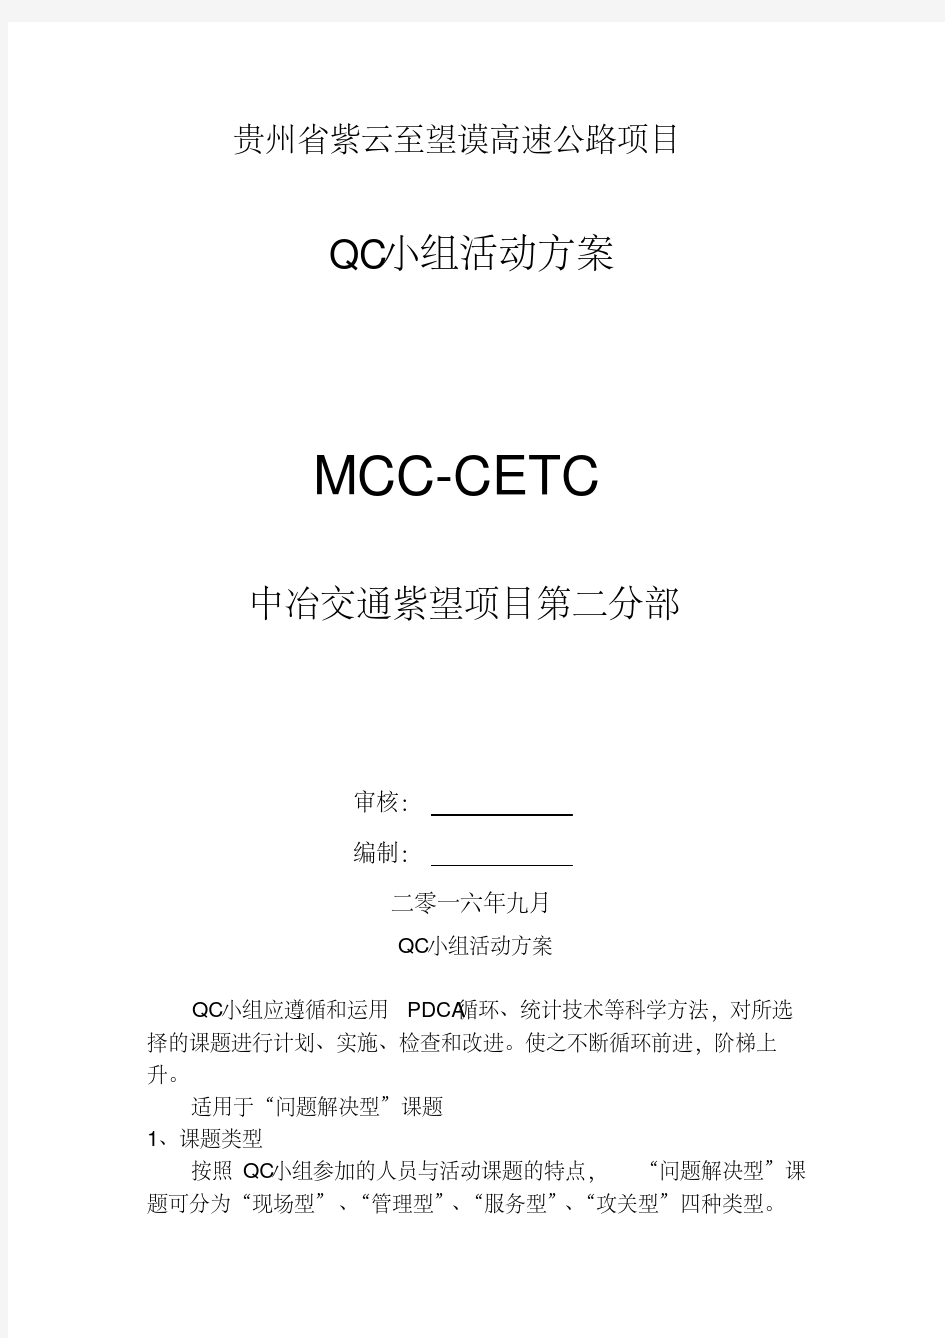 QC小组活动方案(20200515165824)